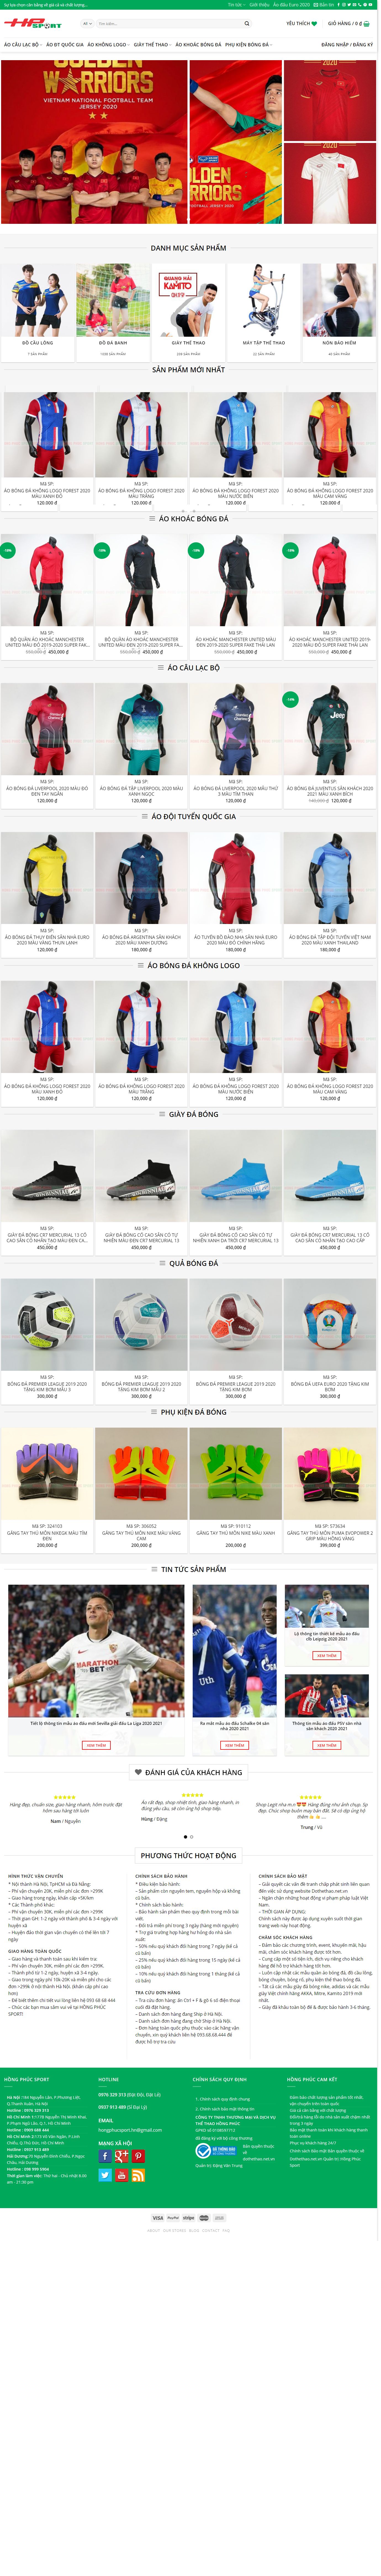 Thiết kế Website đồ thể thao - dothethao.net.vn